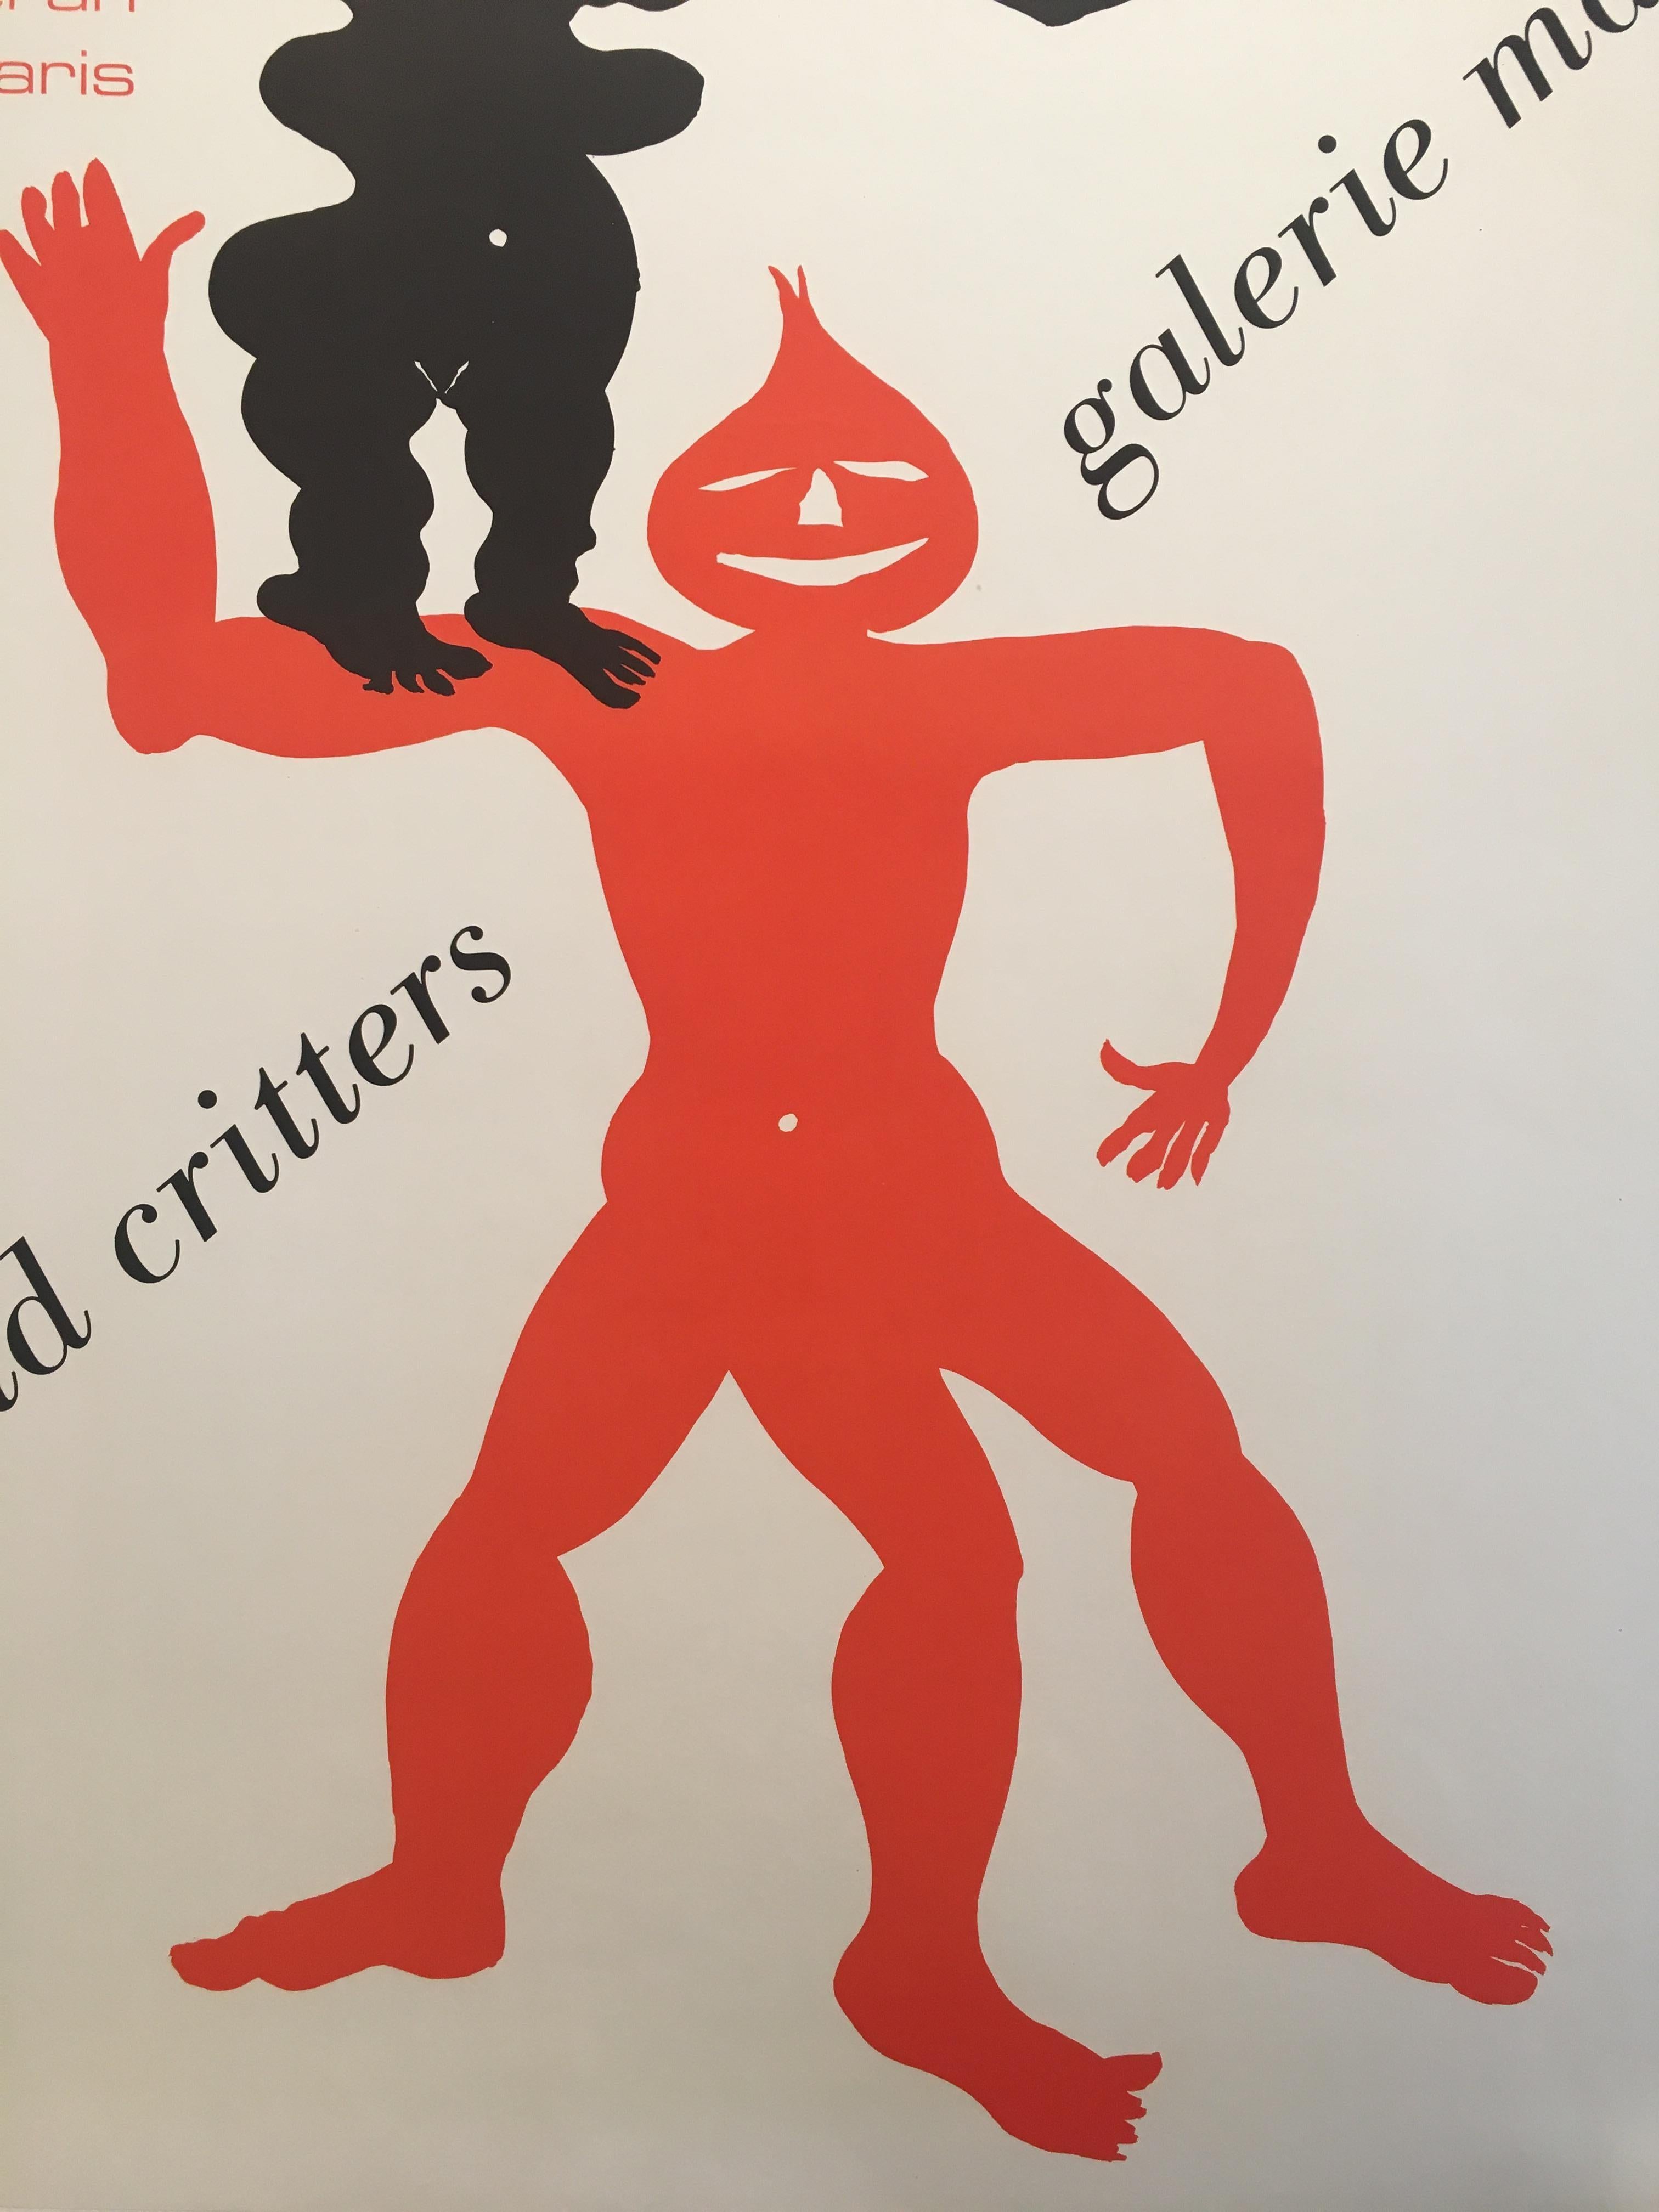 Original vintage poster, 'Calder Crags and Critters' 1975 Galerie Maeght

